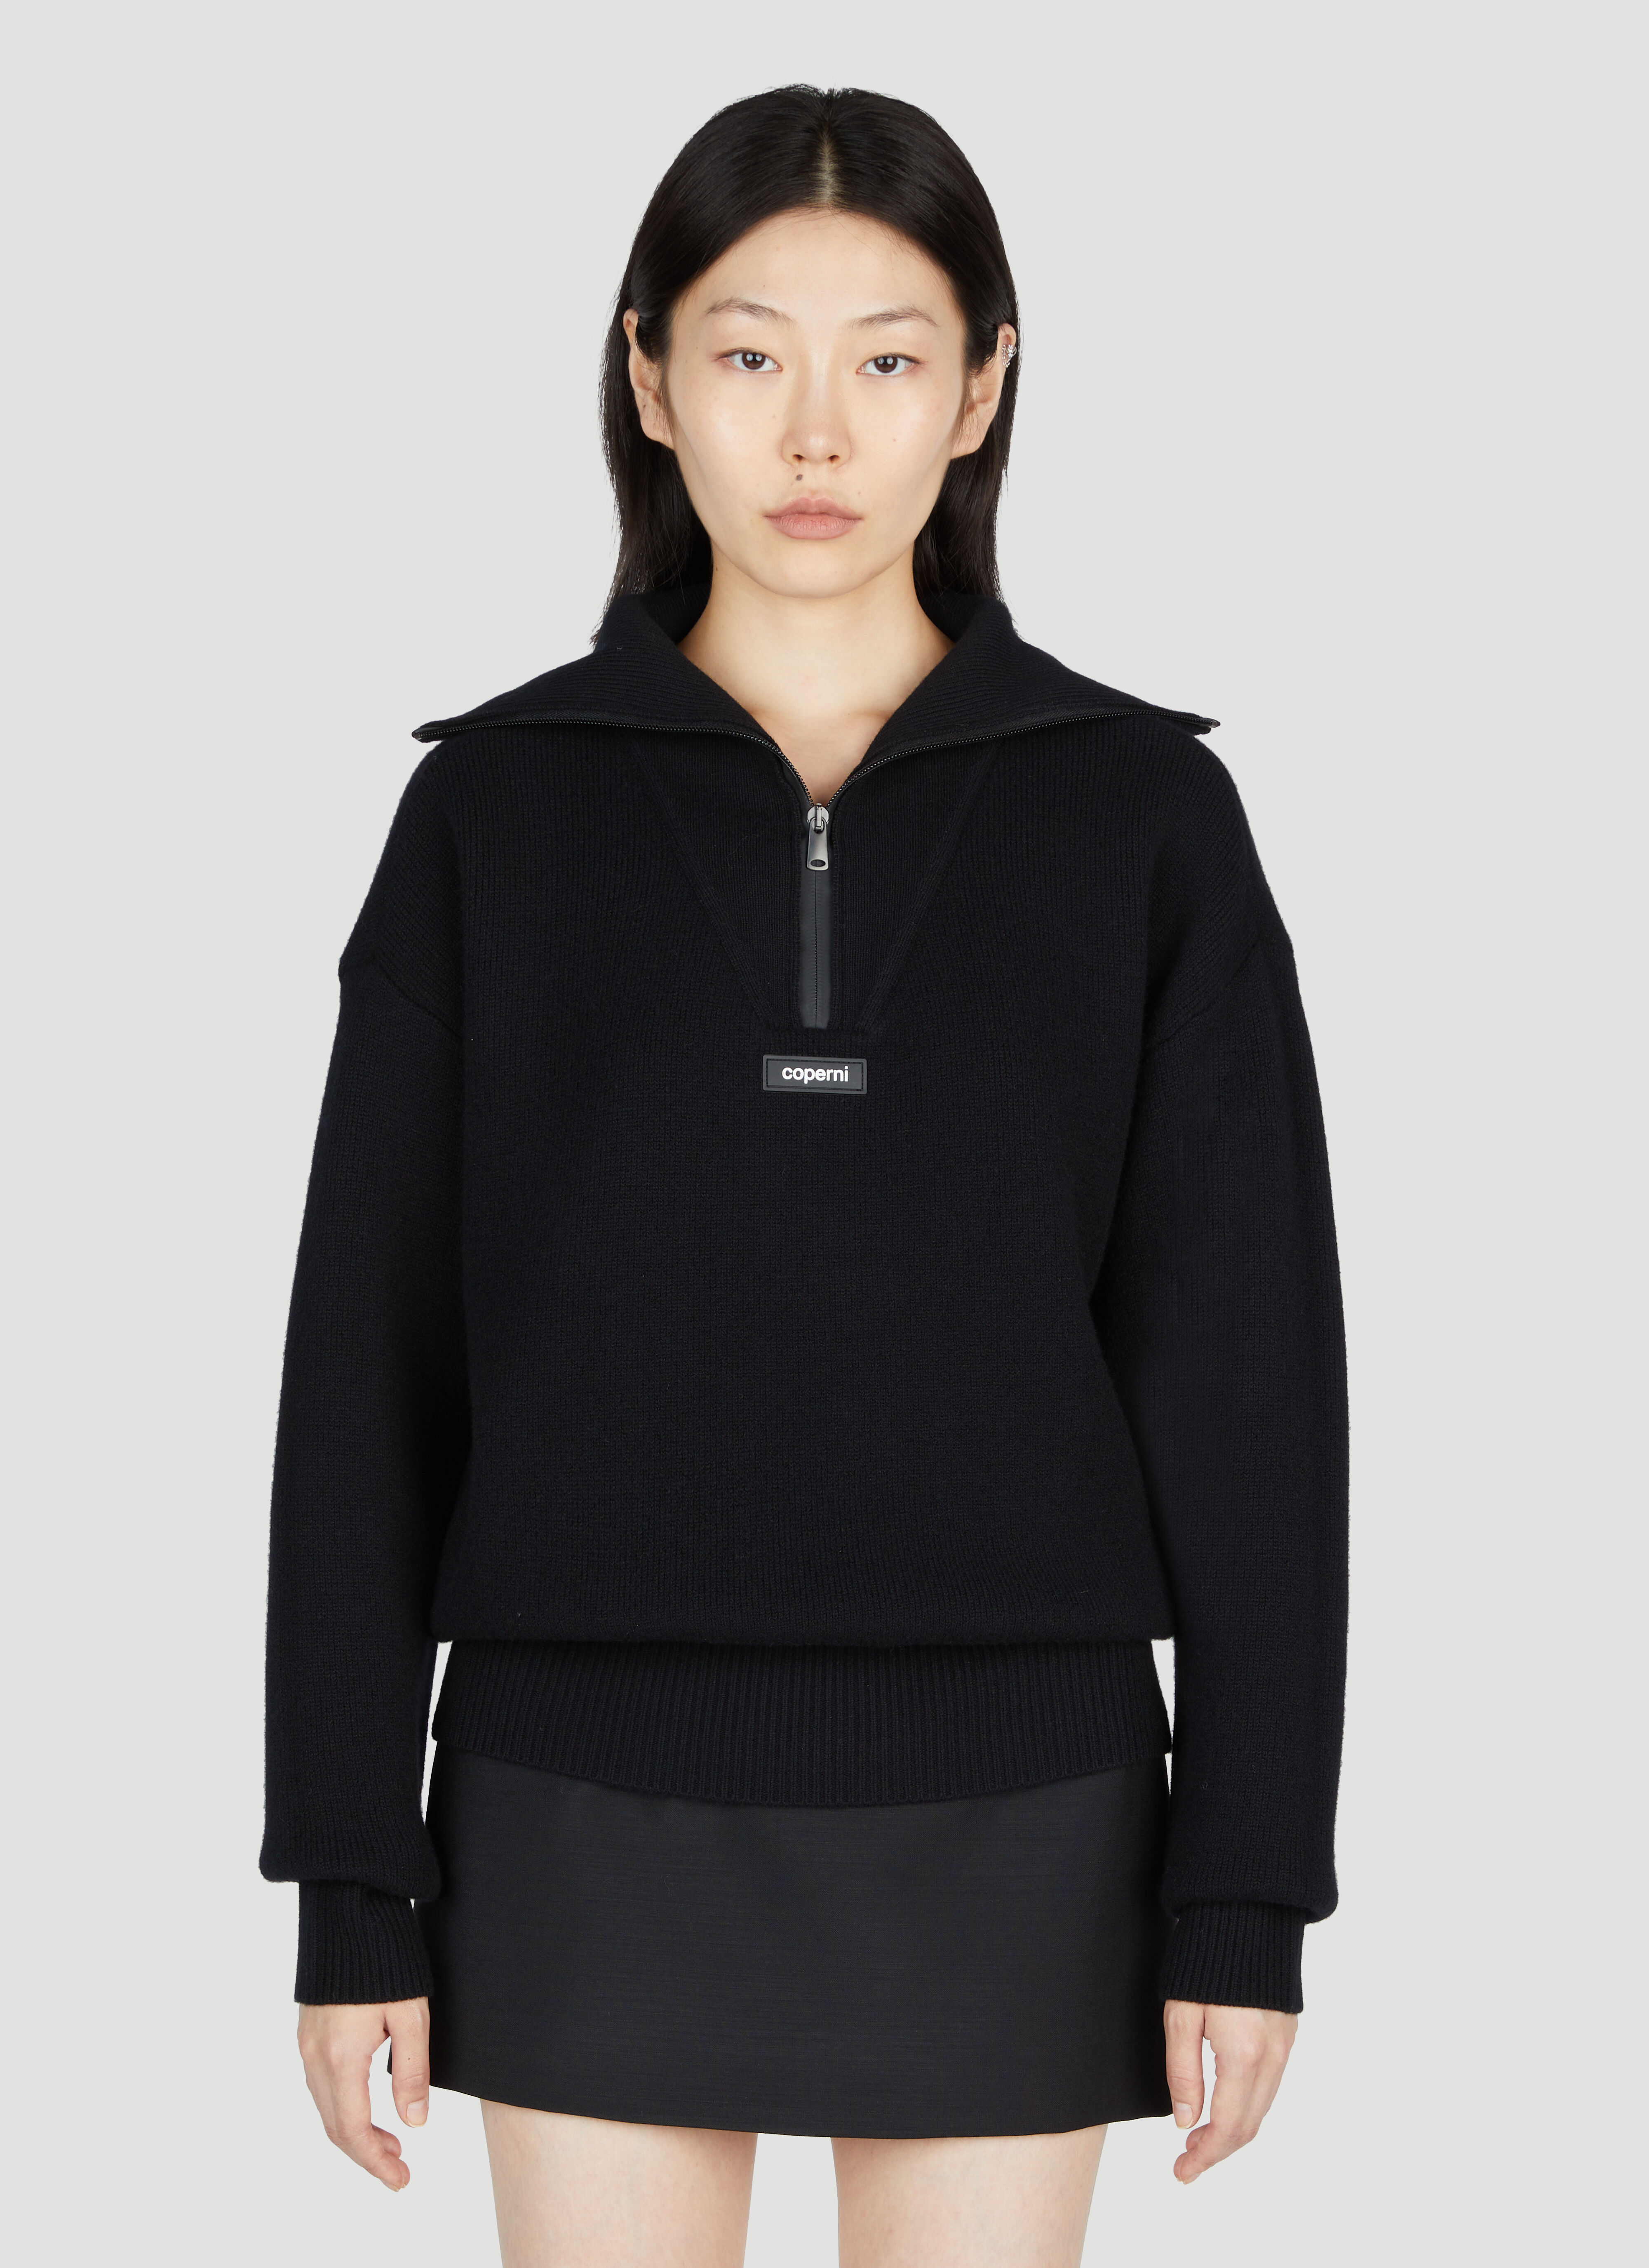 Coperni Half-Zip Boxy Sweater Black cpn0251010